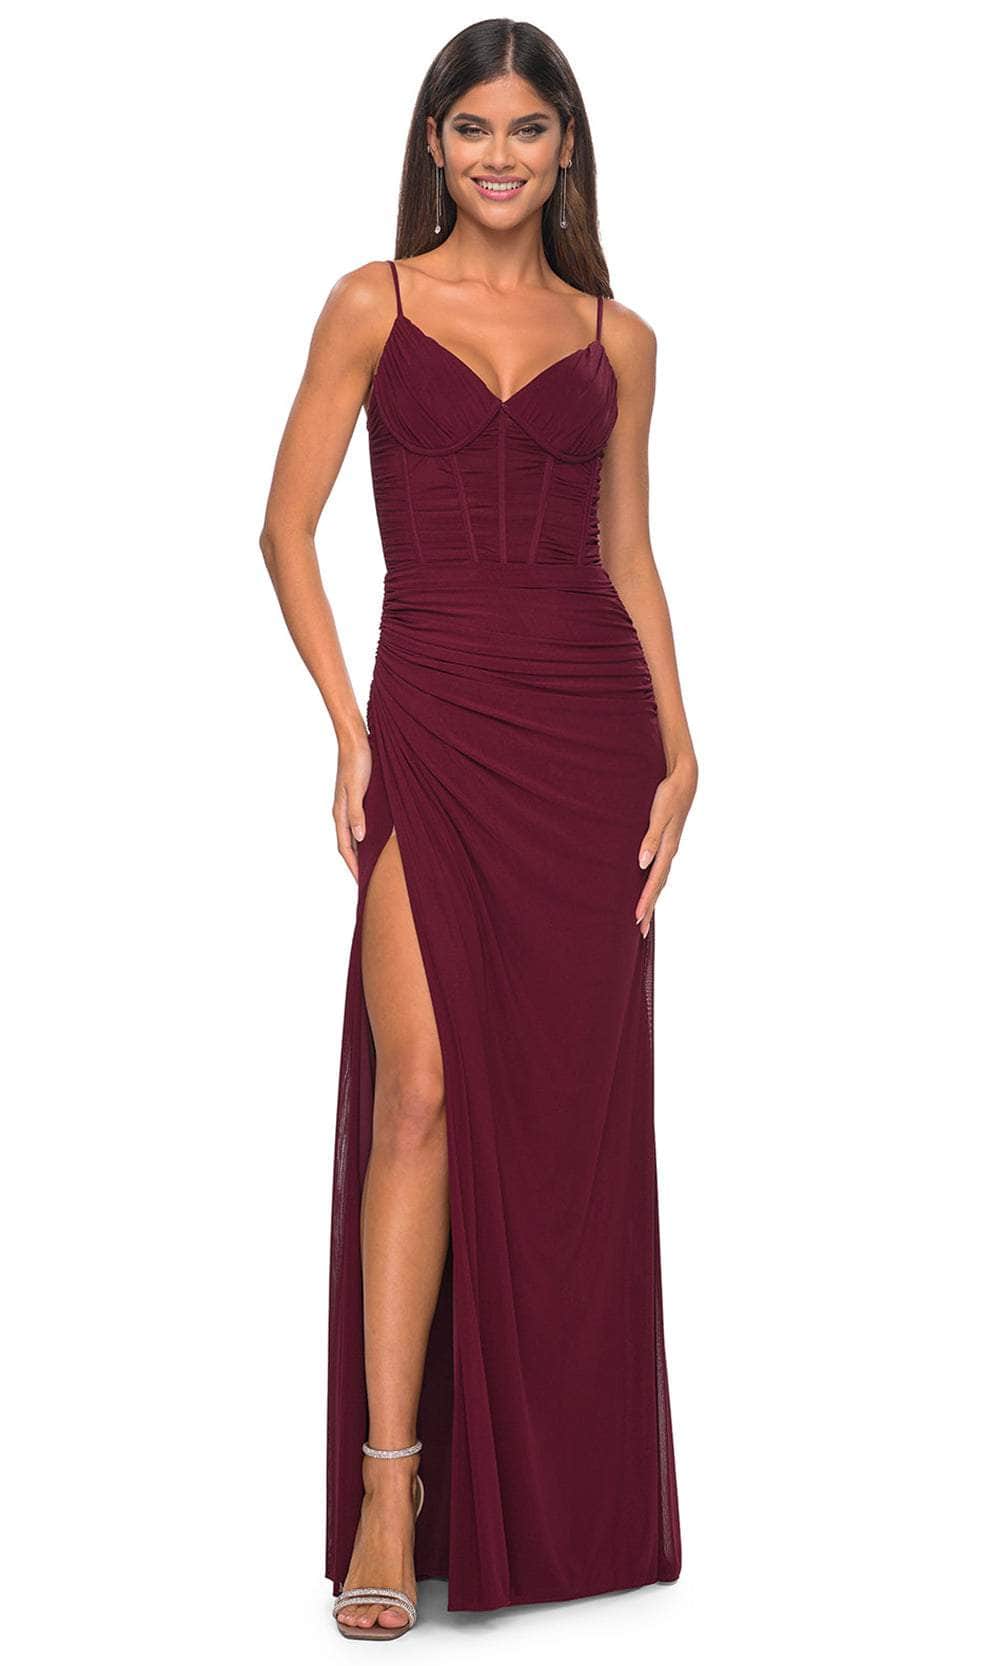 La Femme 32239 - Adjustable Strap Sheath Prom Gown Evening Dresses 00 /  Wine